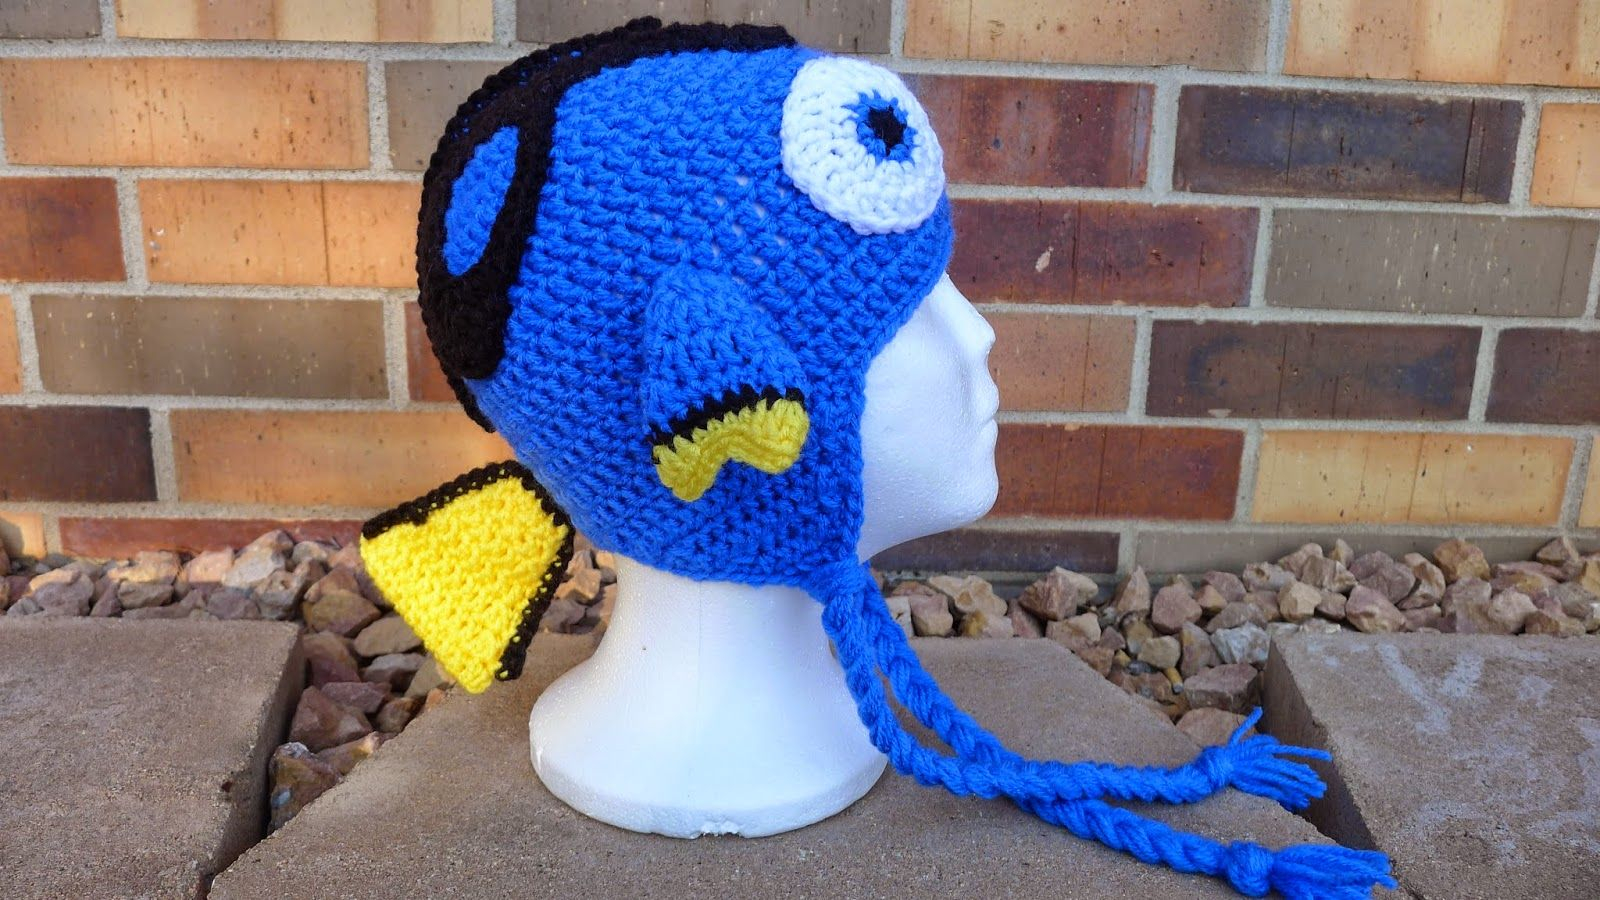 Fish Hat Crochet Pattern Mnopxs2 The Blog Crochet Blue Tang Hat Crochet Projects